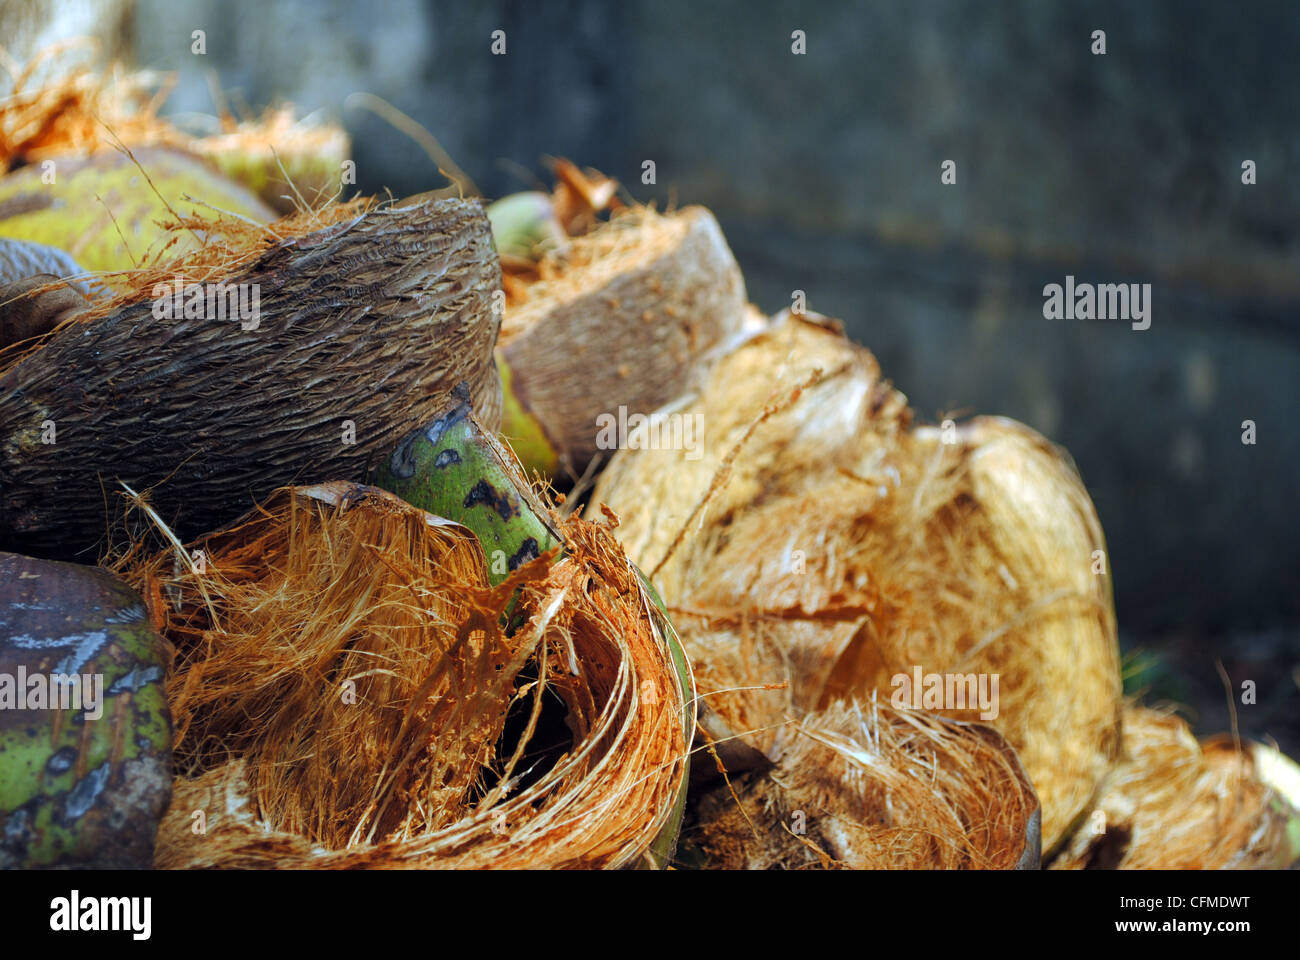 coconut husk Stock Photo